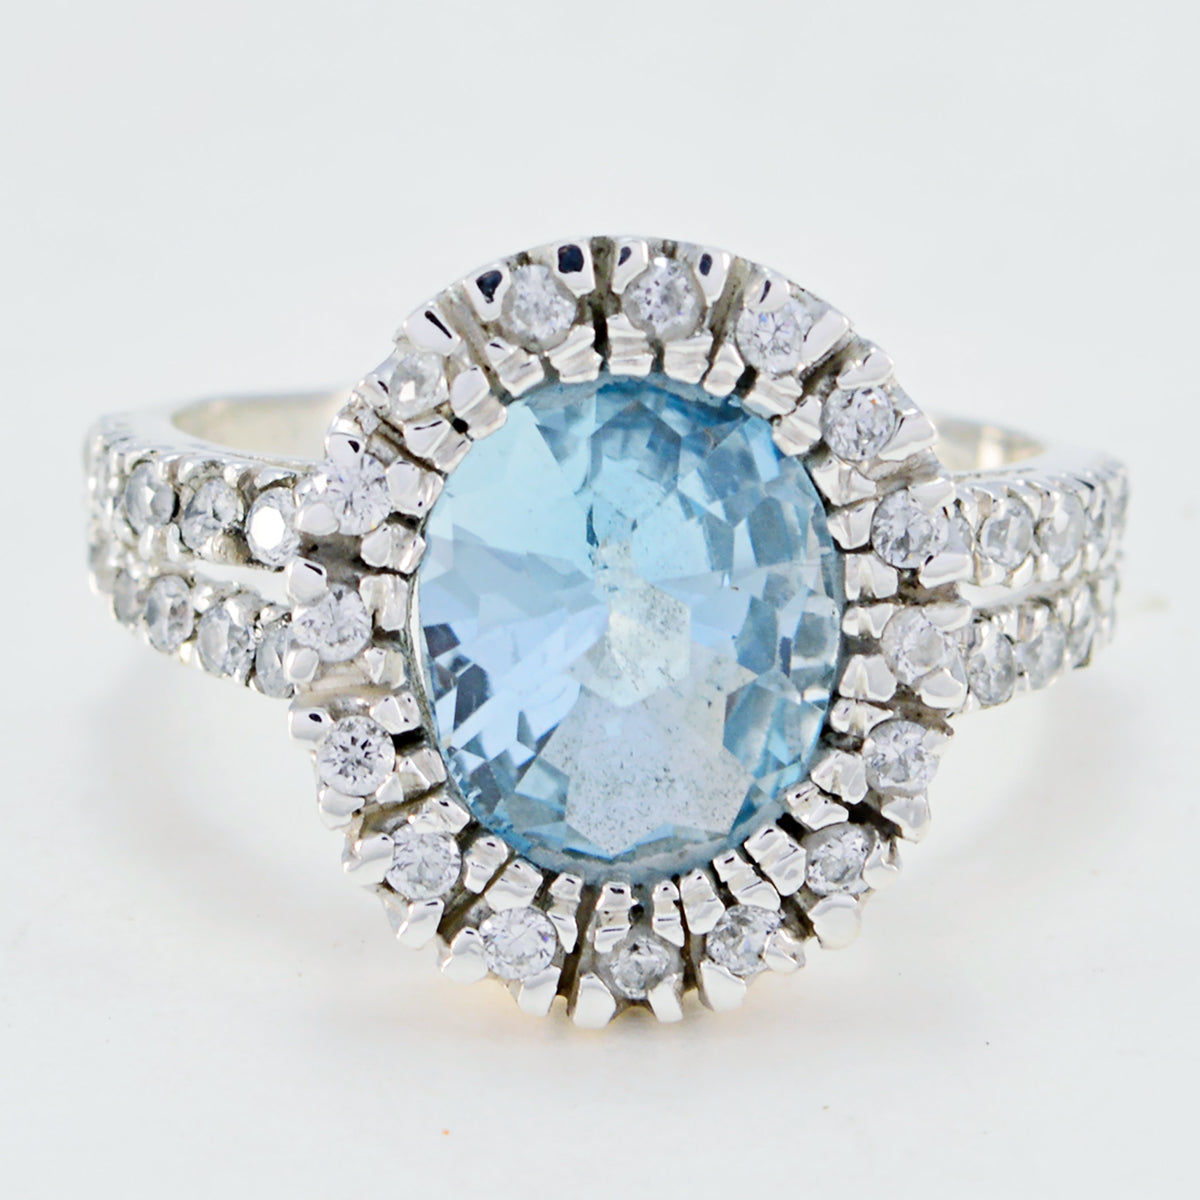 Riyo Seemly Gemstones Blue Topaz 925 Silver Ring Marcasite Jewelry